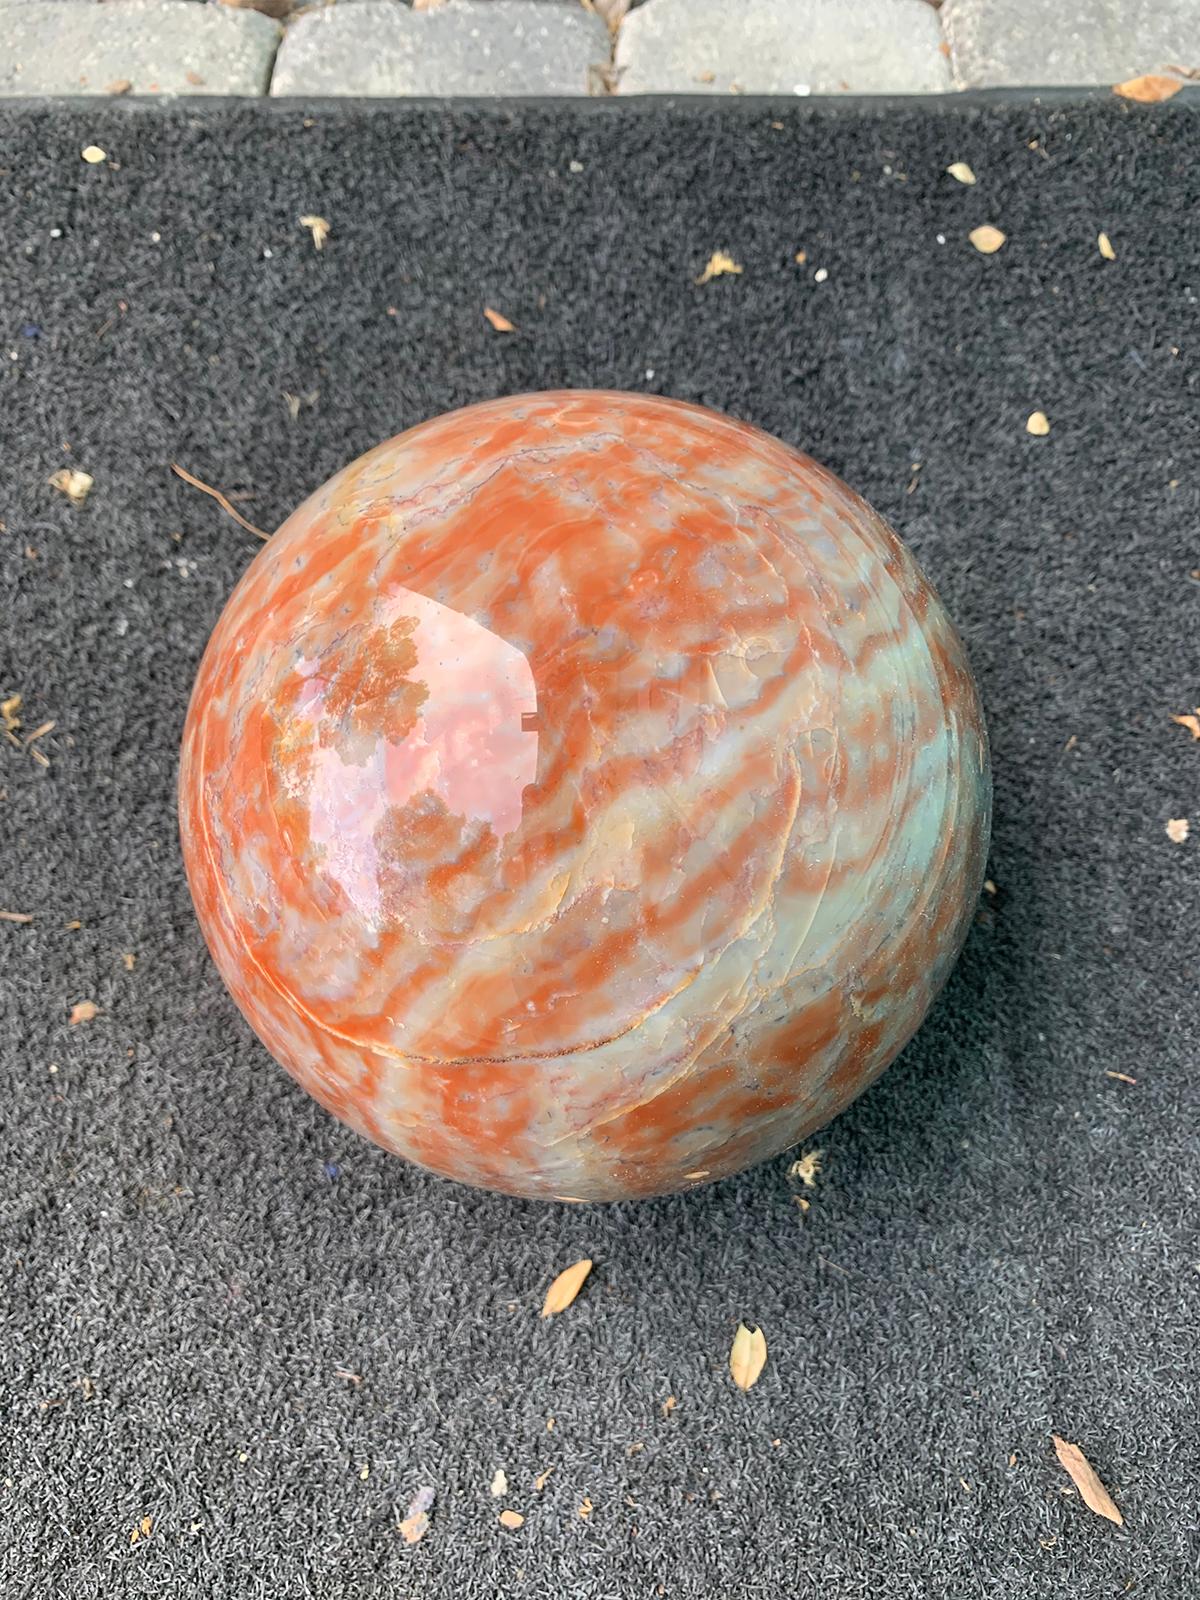 Large 20th century marble Orb, orange, white, grey color veining.